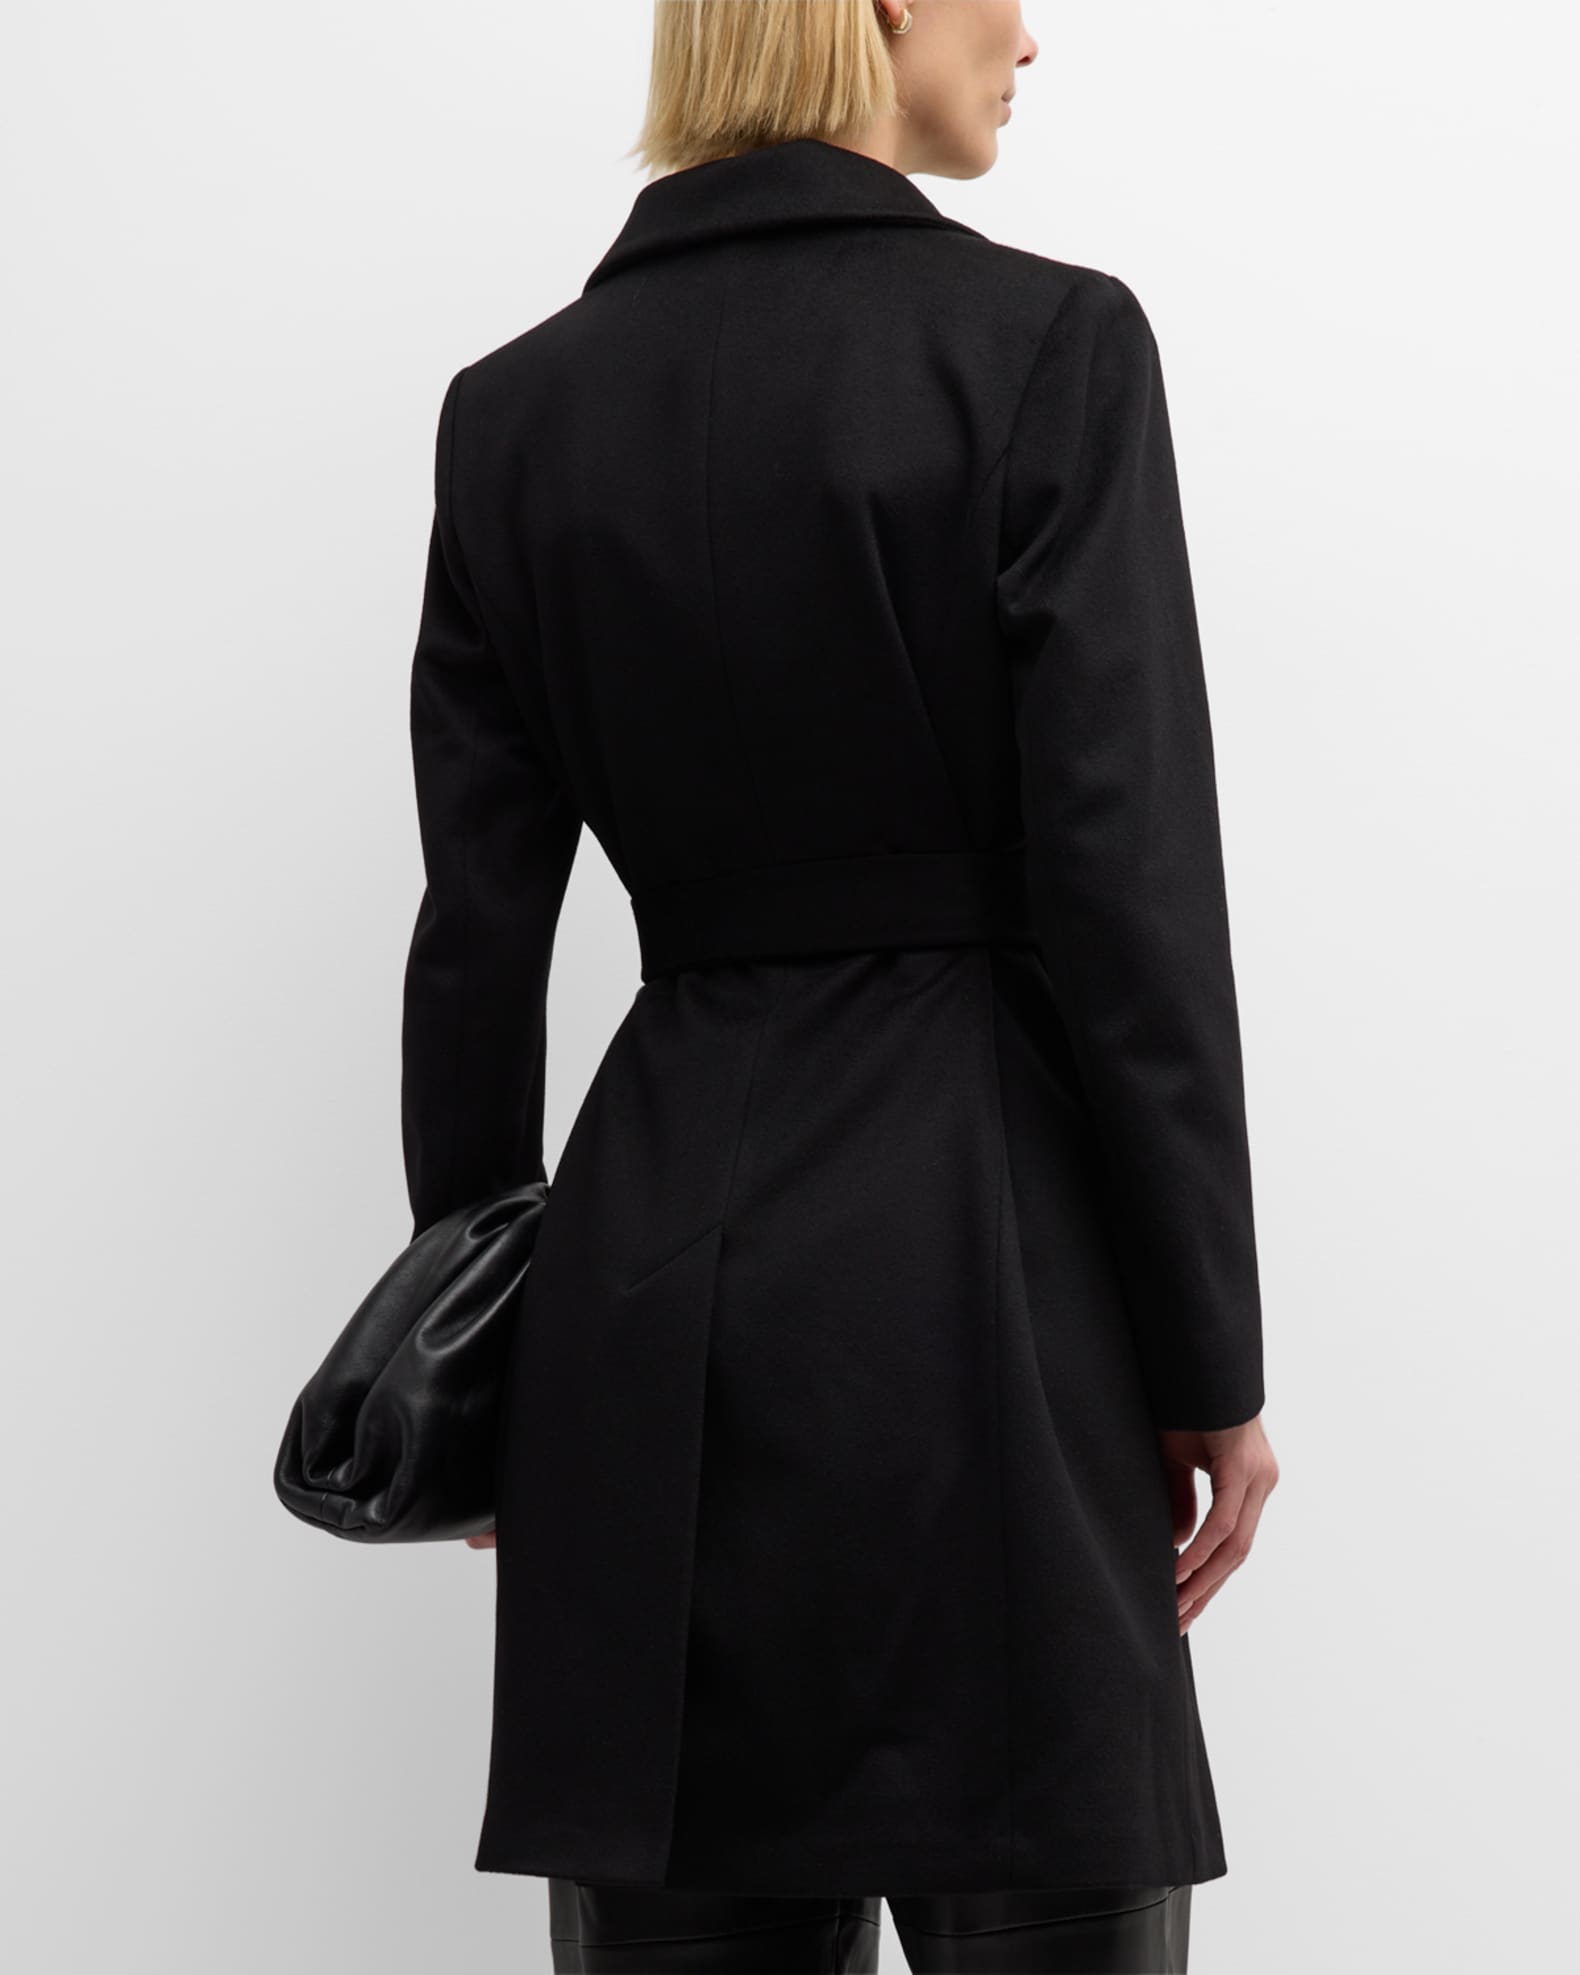 Michael Michael Kors Women's Belted Logo Trench Coat, Dark Camel, S